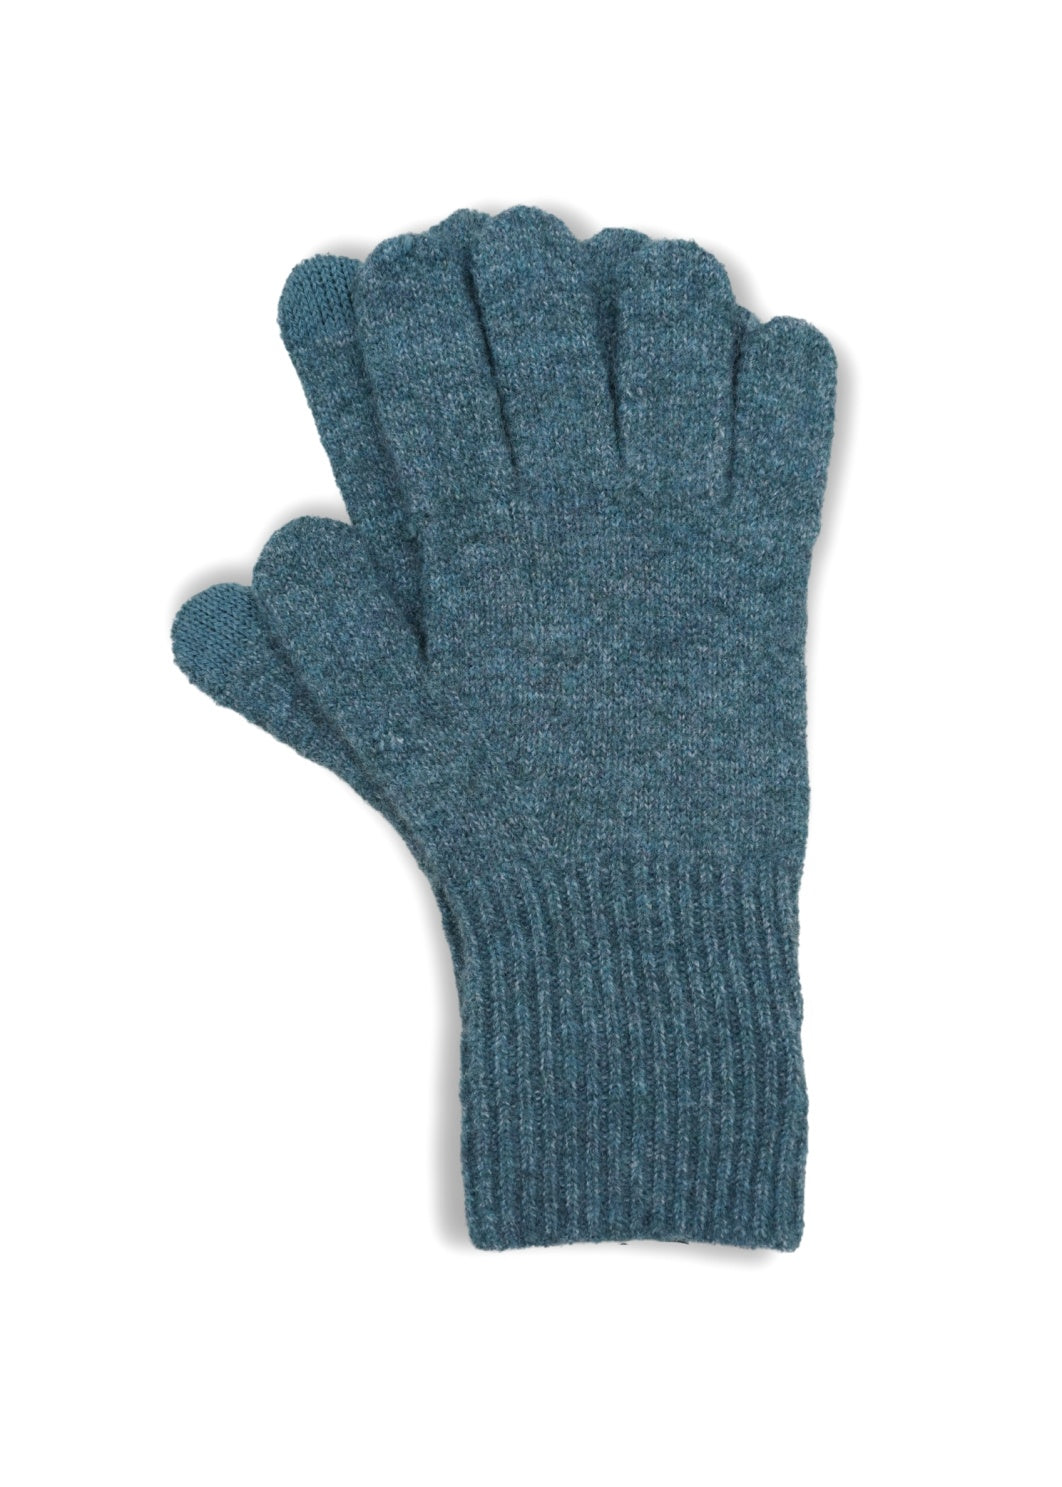 V Fraas - Knit Tech Eco Glove